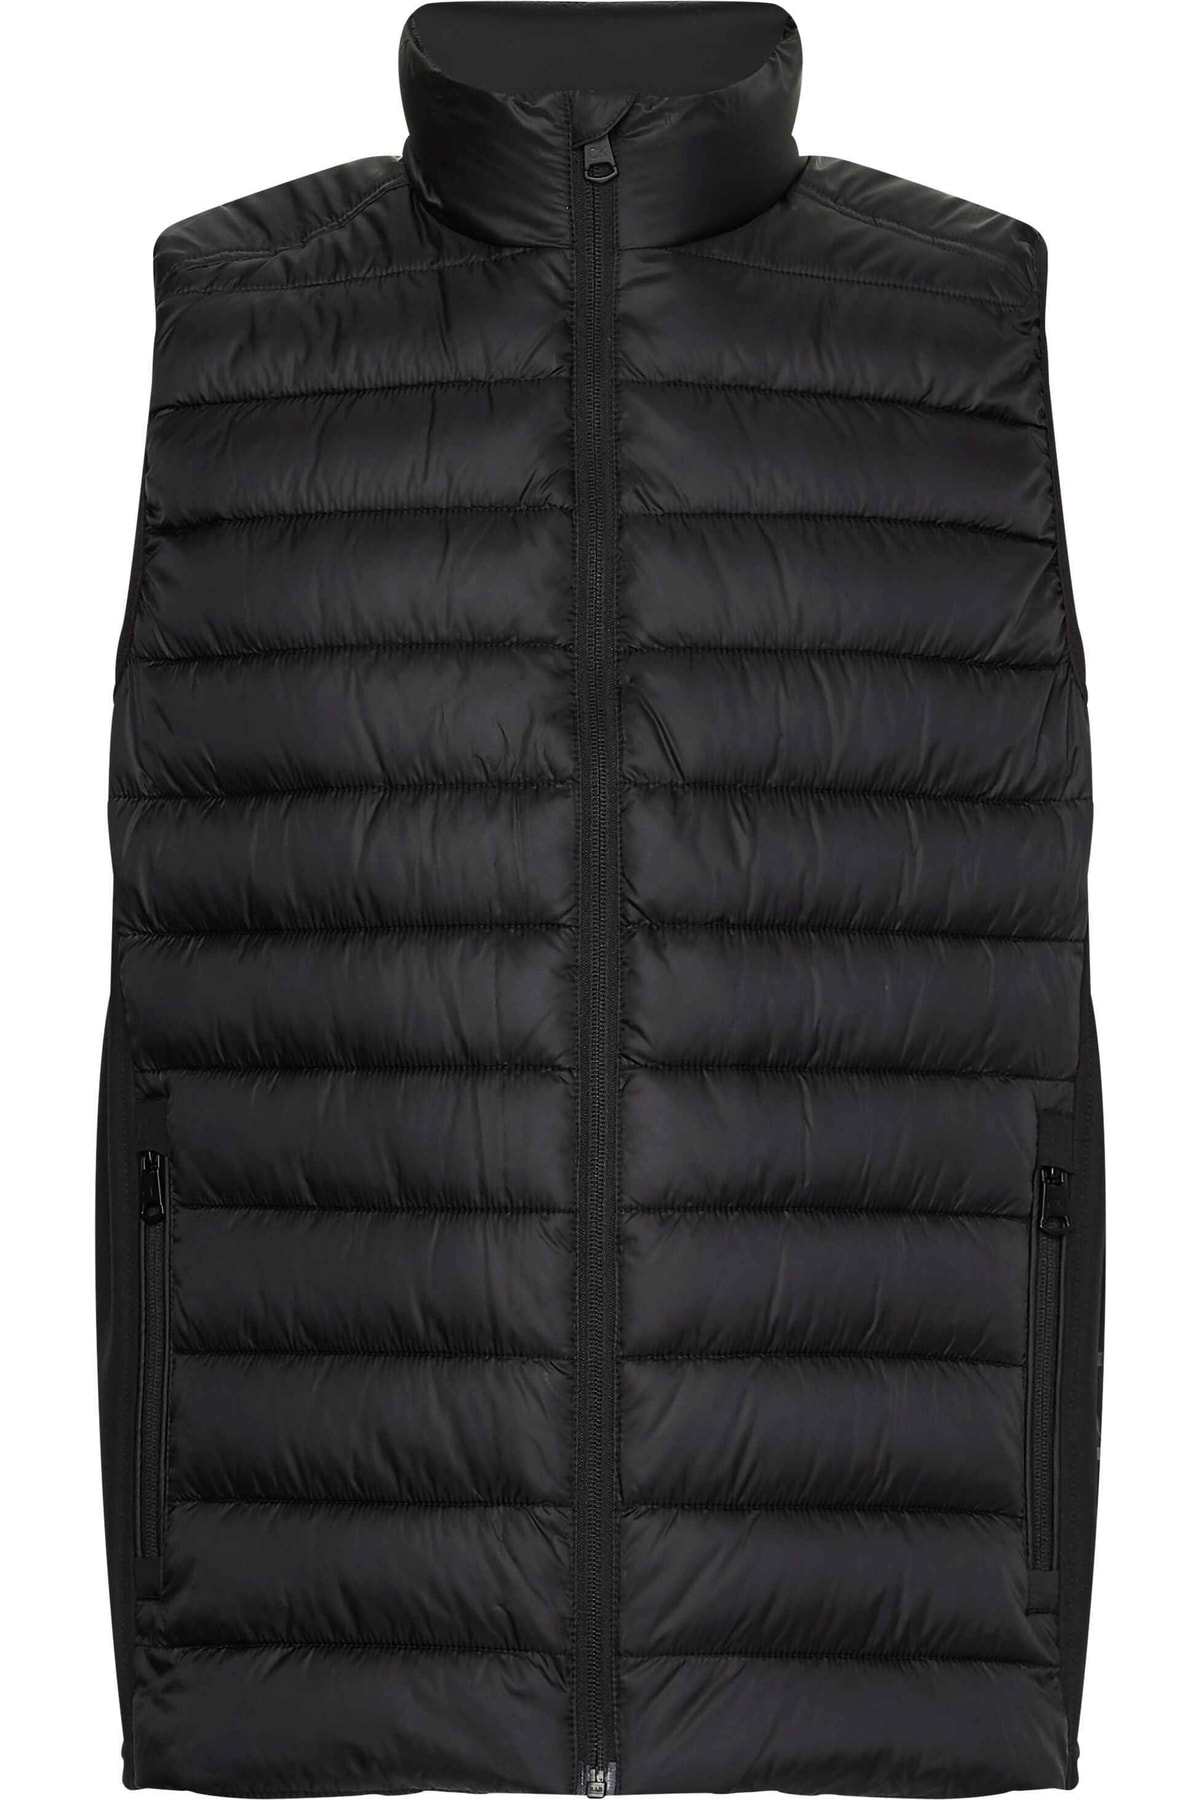 Calvin Klein Vest - Black - Puffer - Trendyol